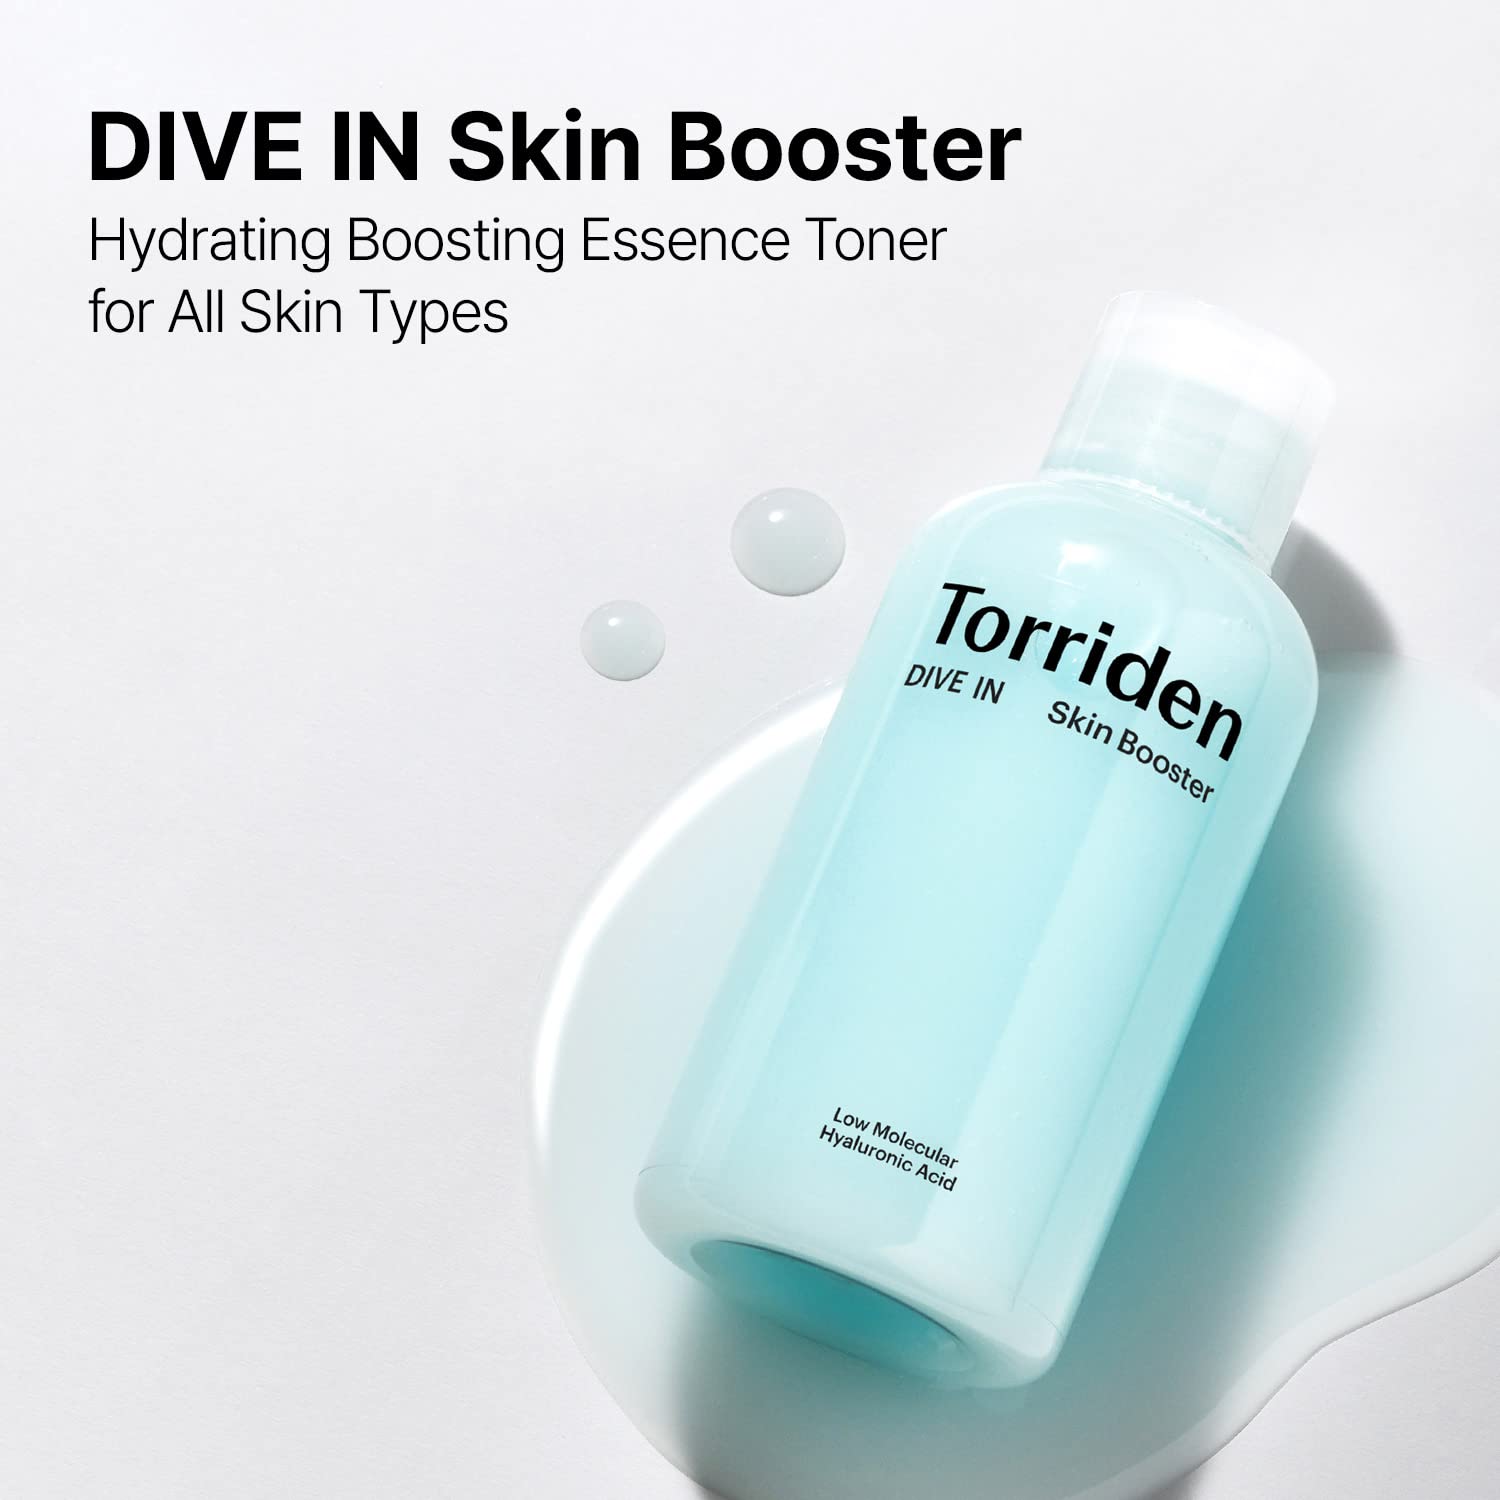 Torriden Dive-in Low Molecule Hyaluronic Acid Skin Booster